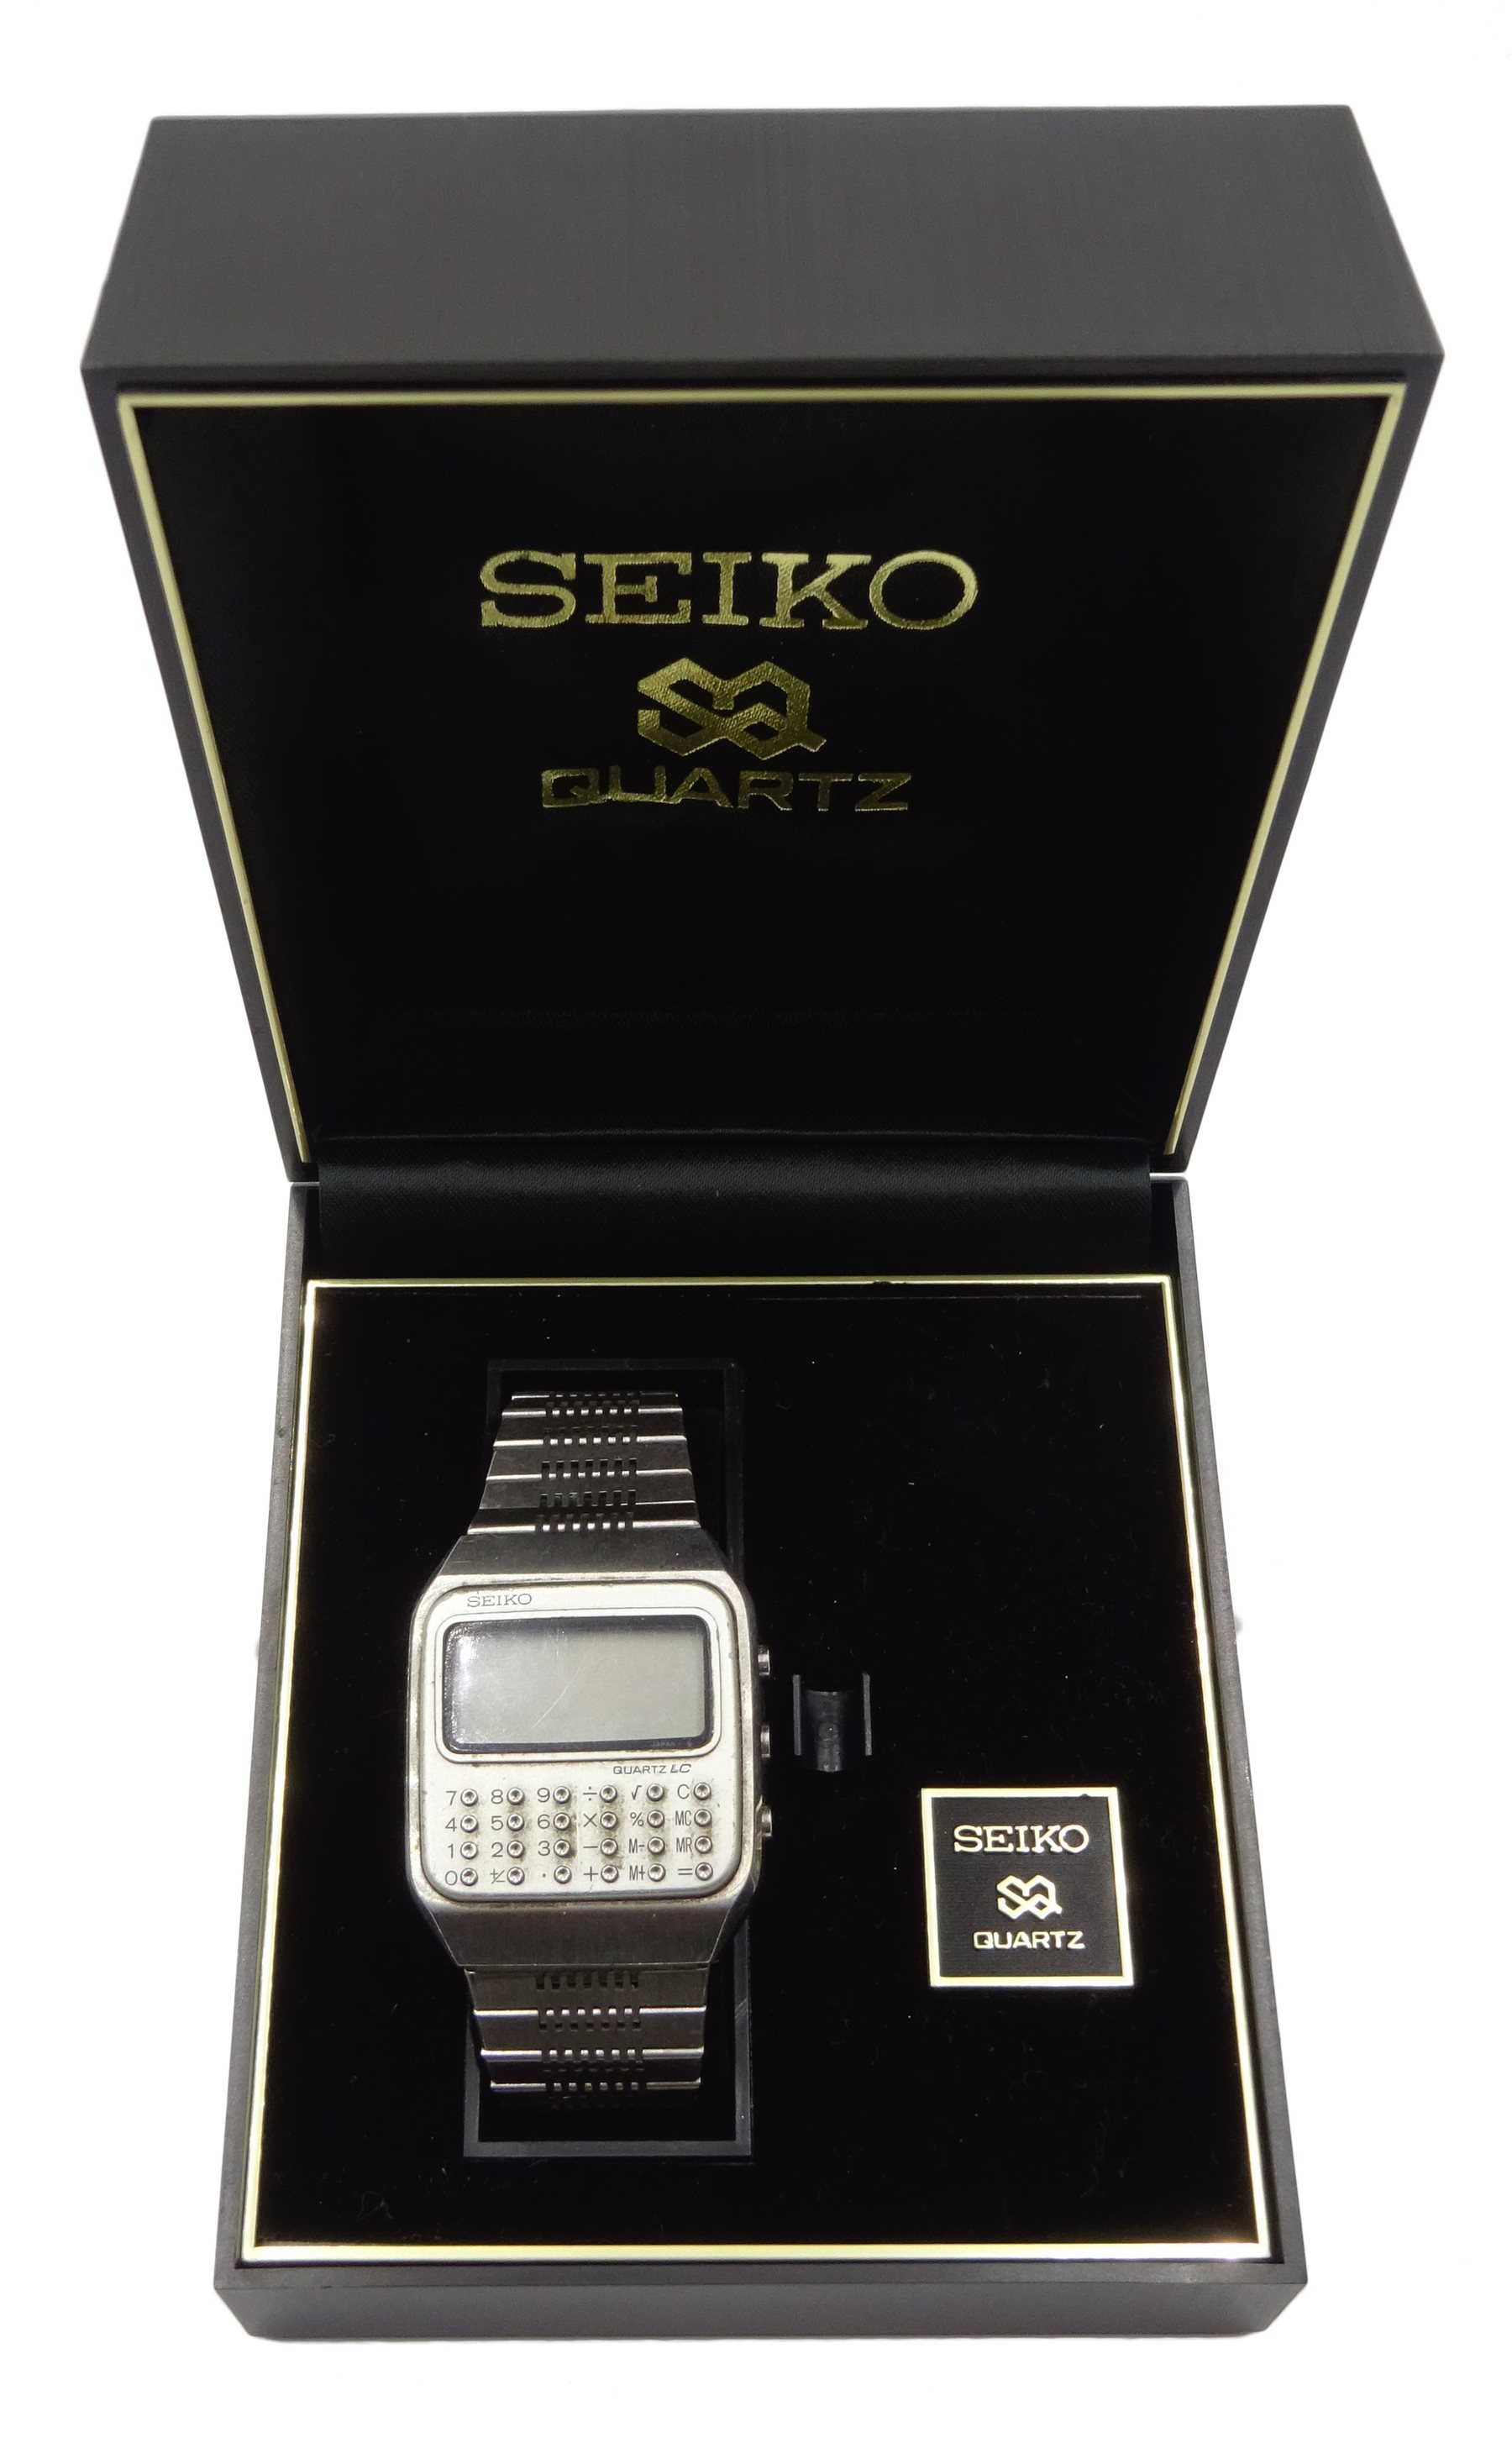 Seiko Calculator C153-5007 stainless steel quartz wristwatch, serial number  892965, in original box - Jewellery, Watches & Silver